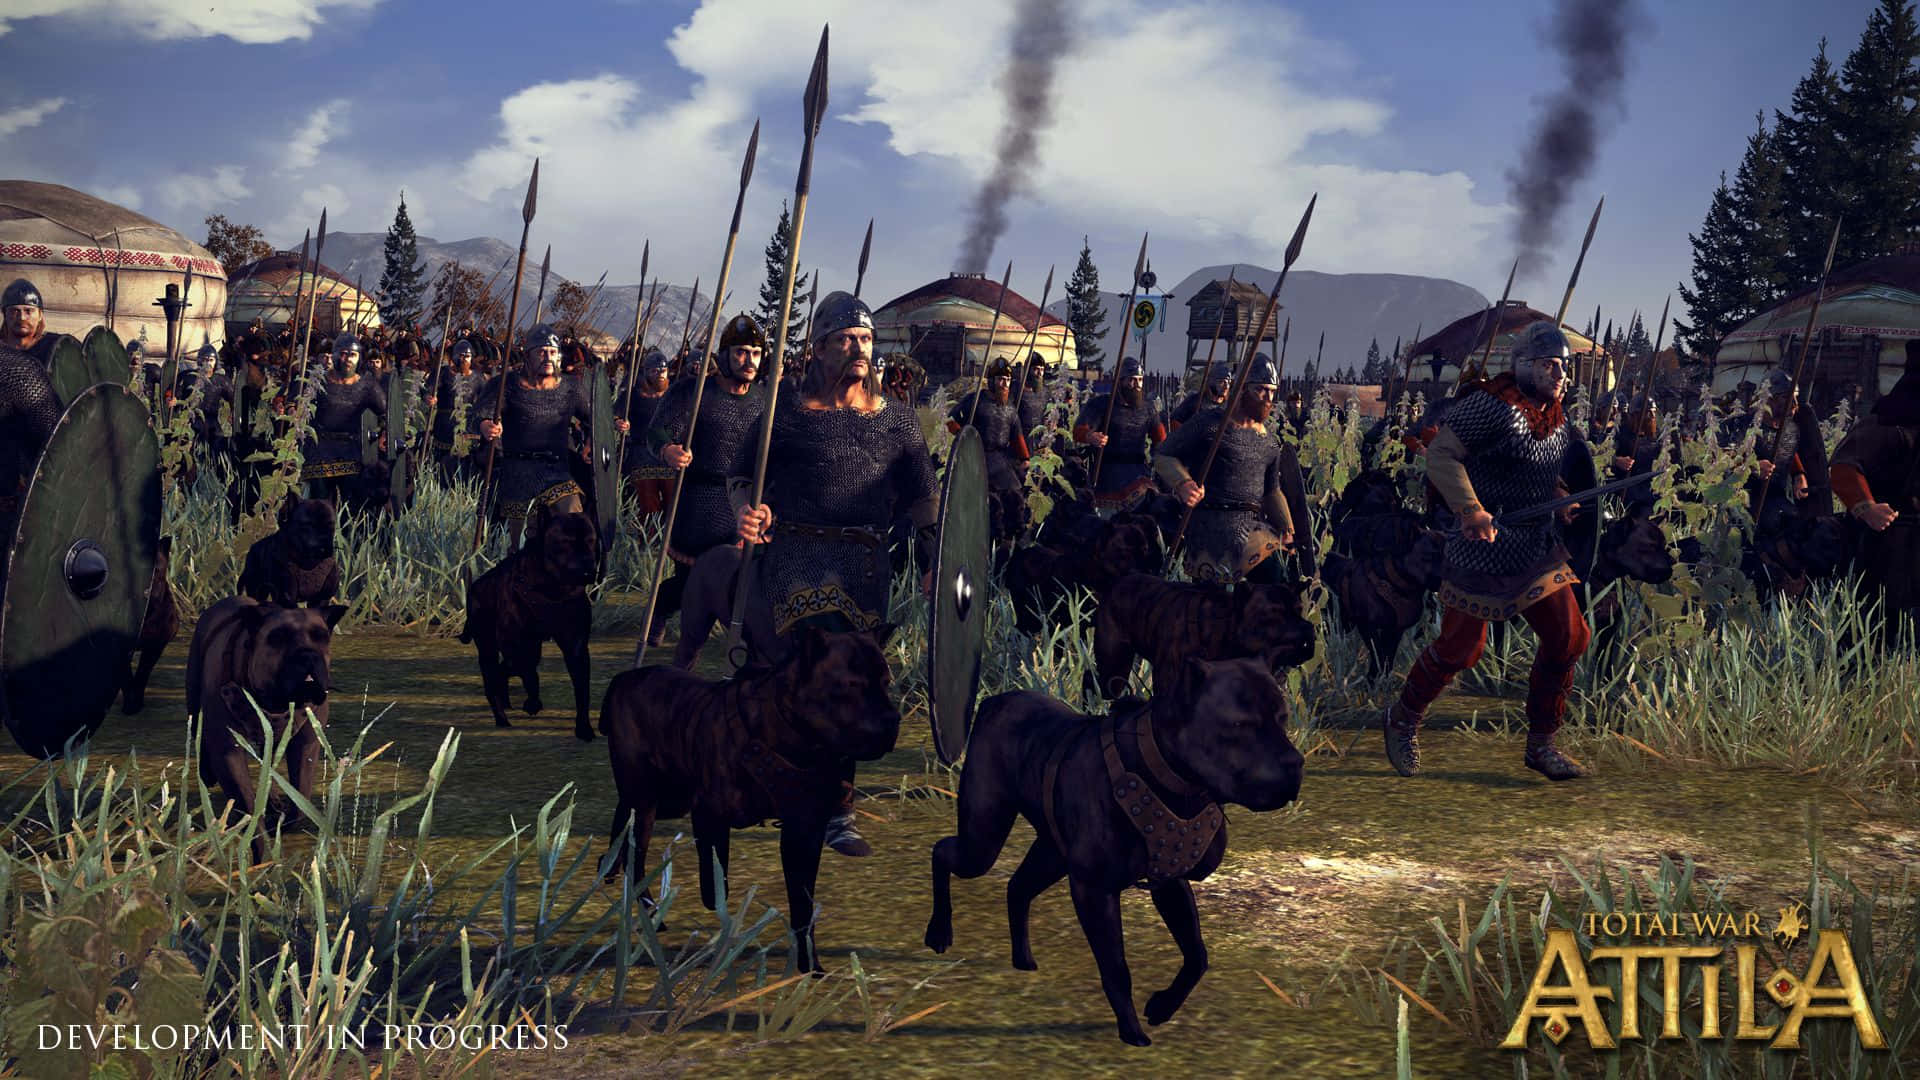 Conquer the Ancient World in Total War Attila